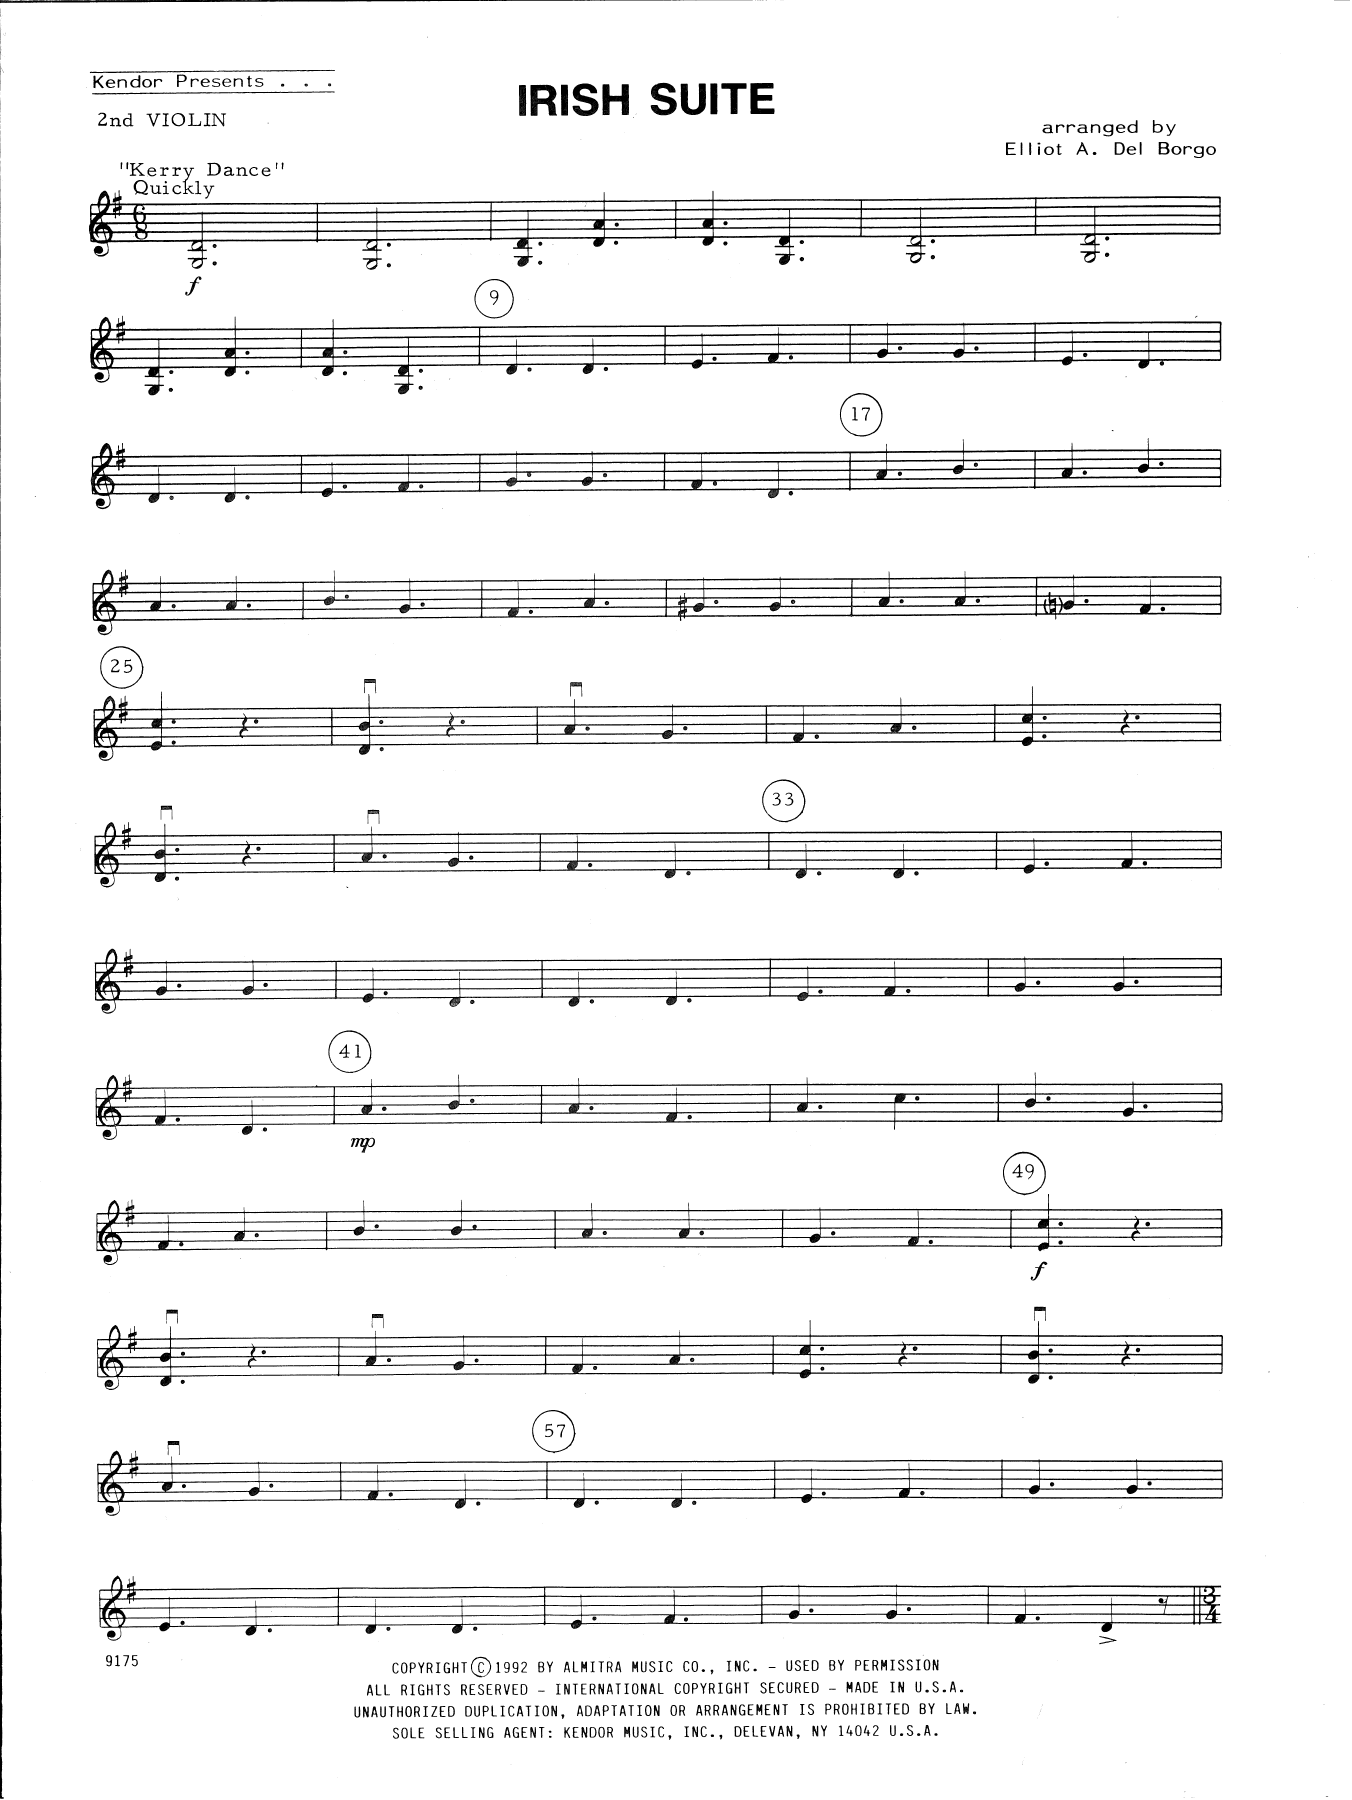 Download Elliot A. Del Borgo Irish Suite - 2nd Violin Sheet Music